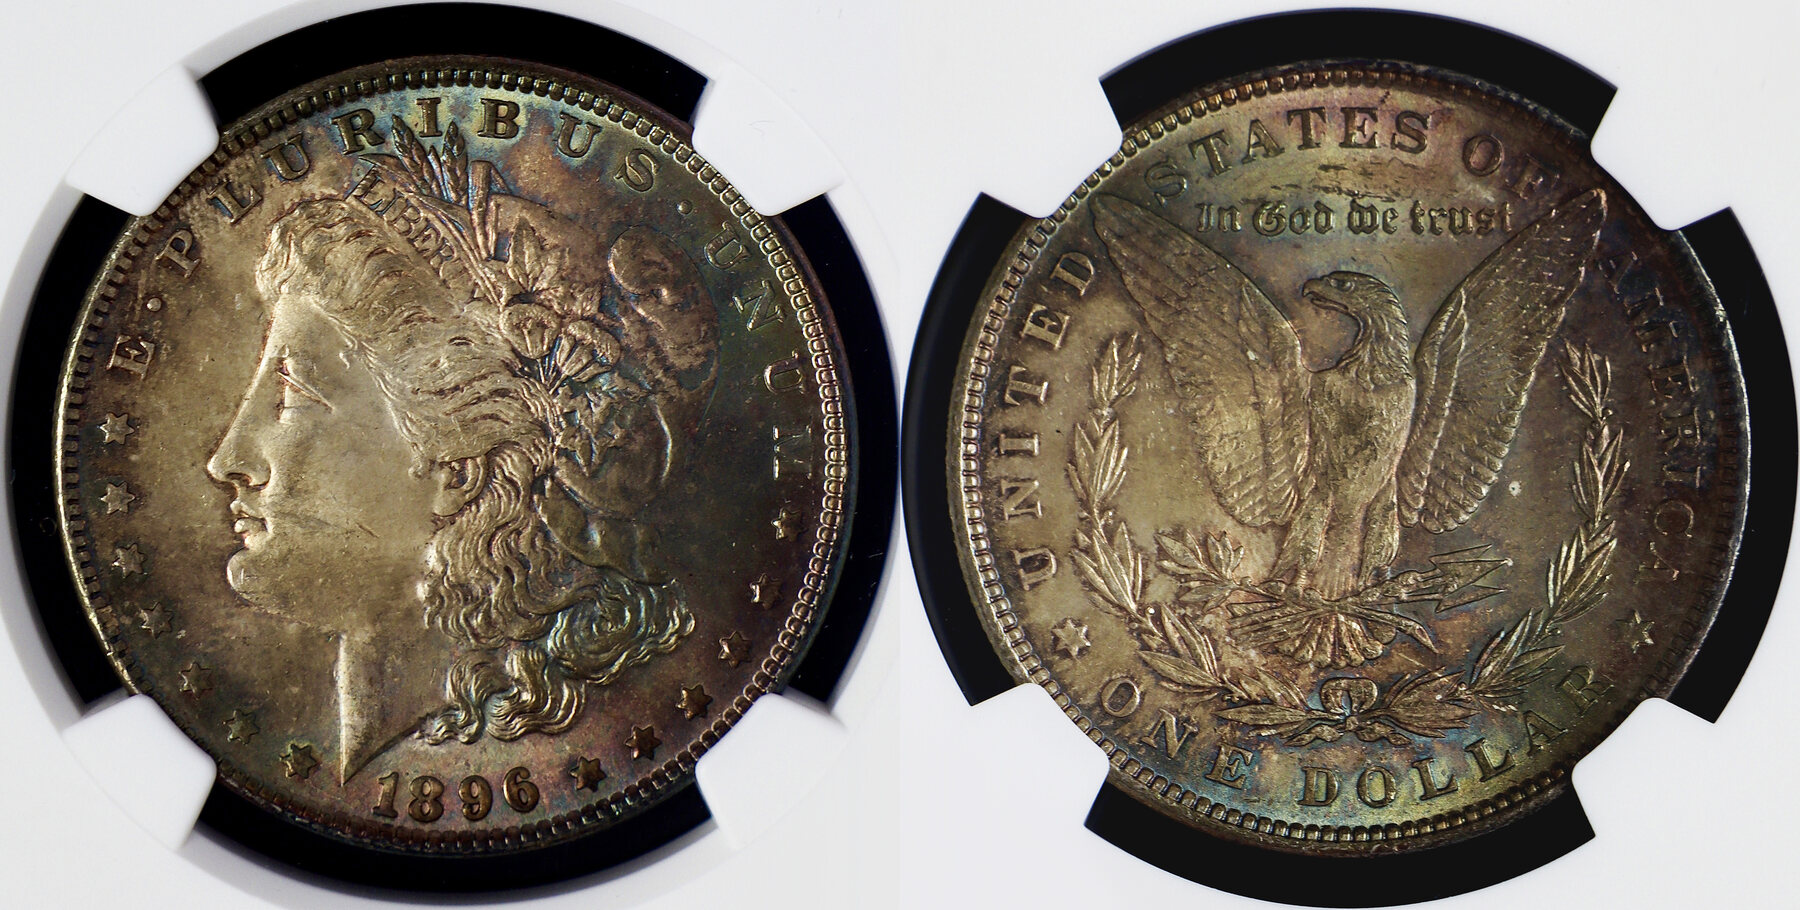 USA $1 SILVER DOLLAR 1896 Morgan Dollar - Philadelphia (no mm 